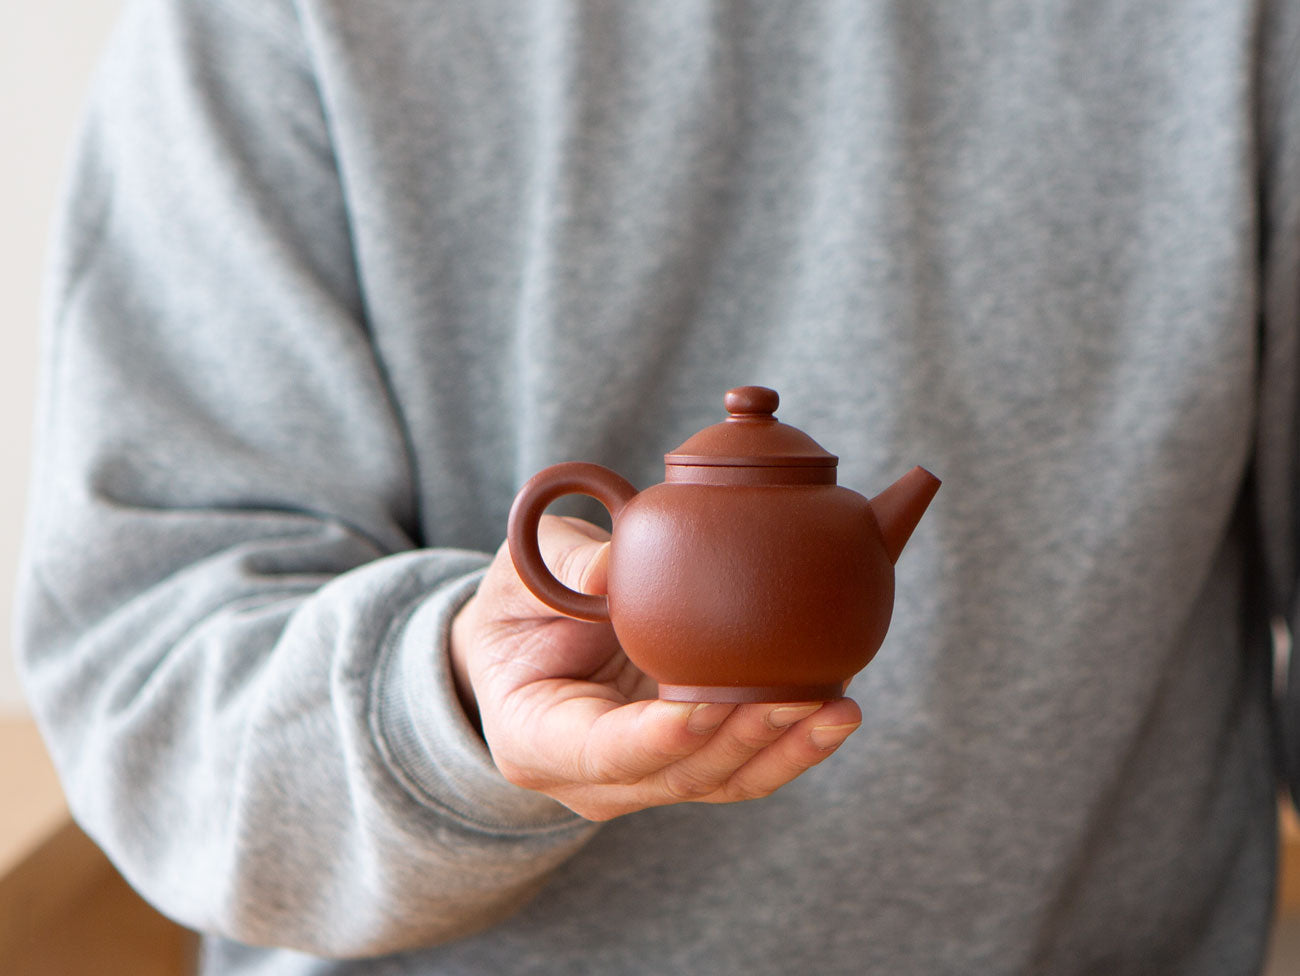 Pearl teapot. Full hand-built using zhuni clay.